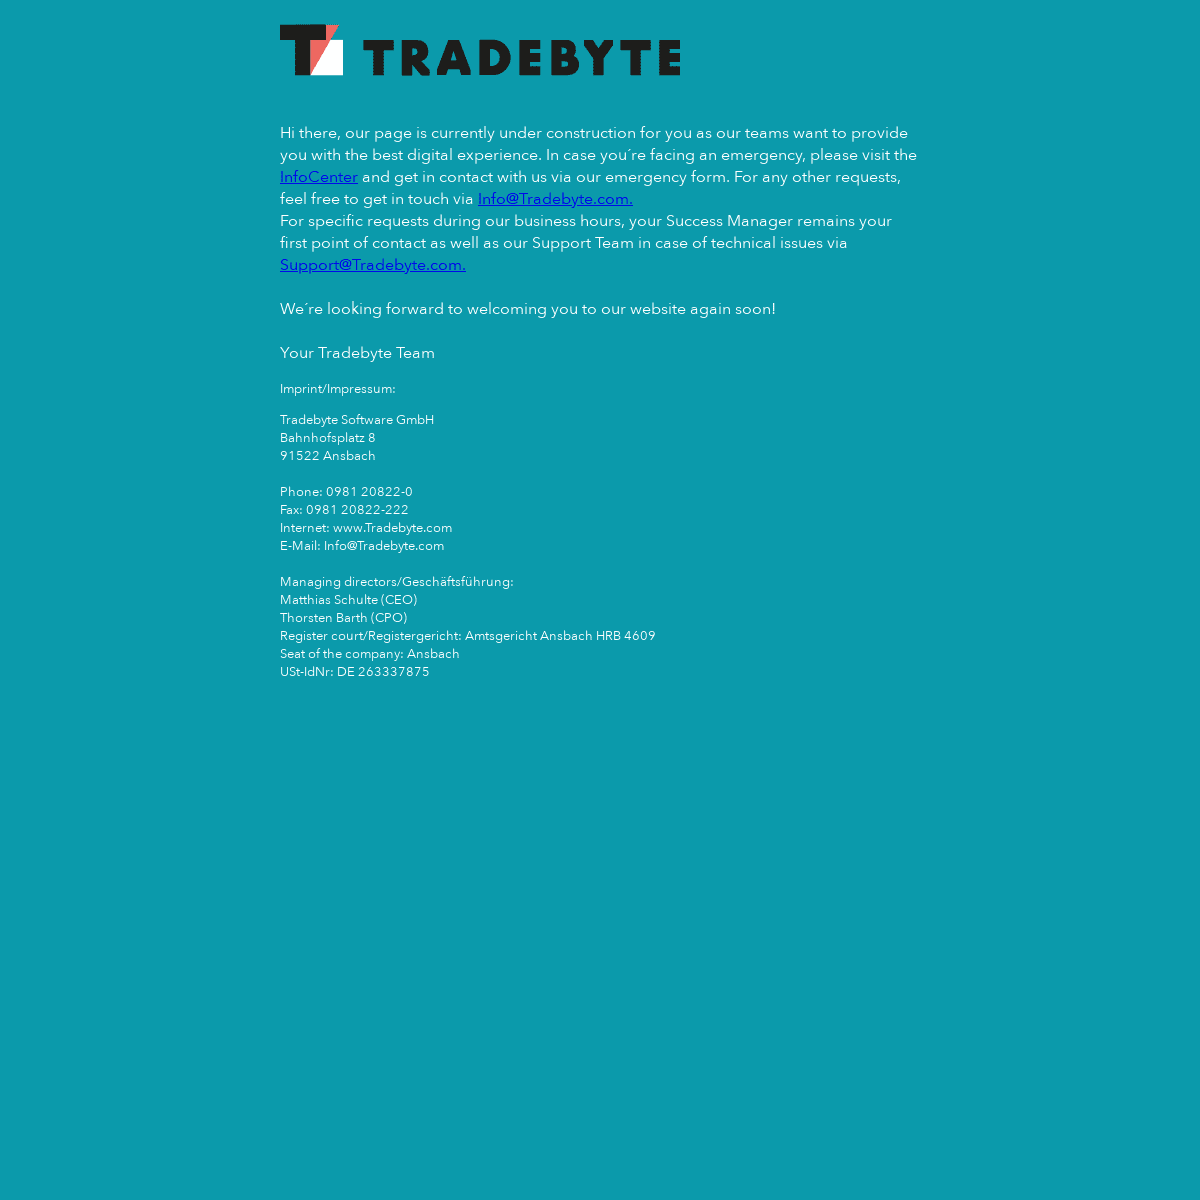 A complete backup of https://tradebyte.com